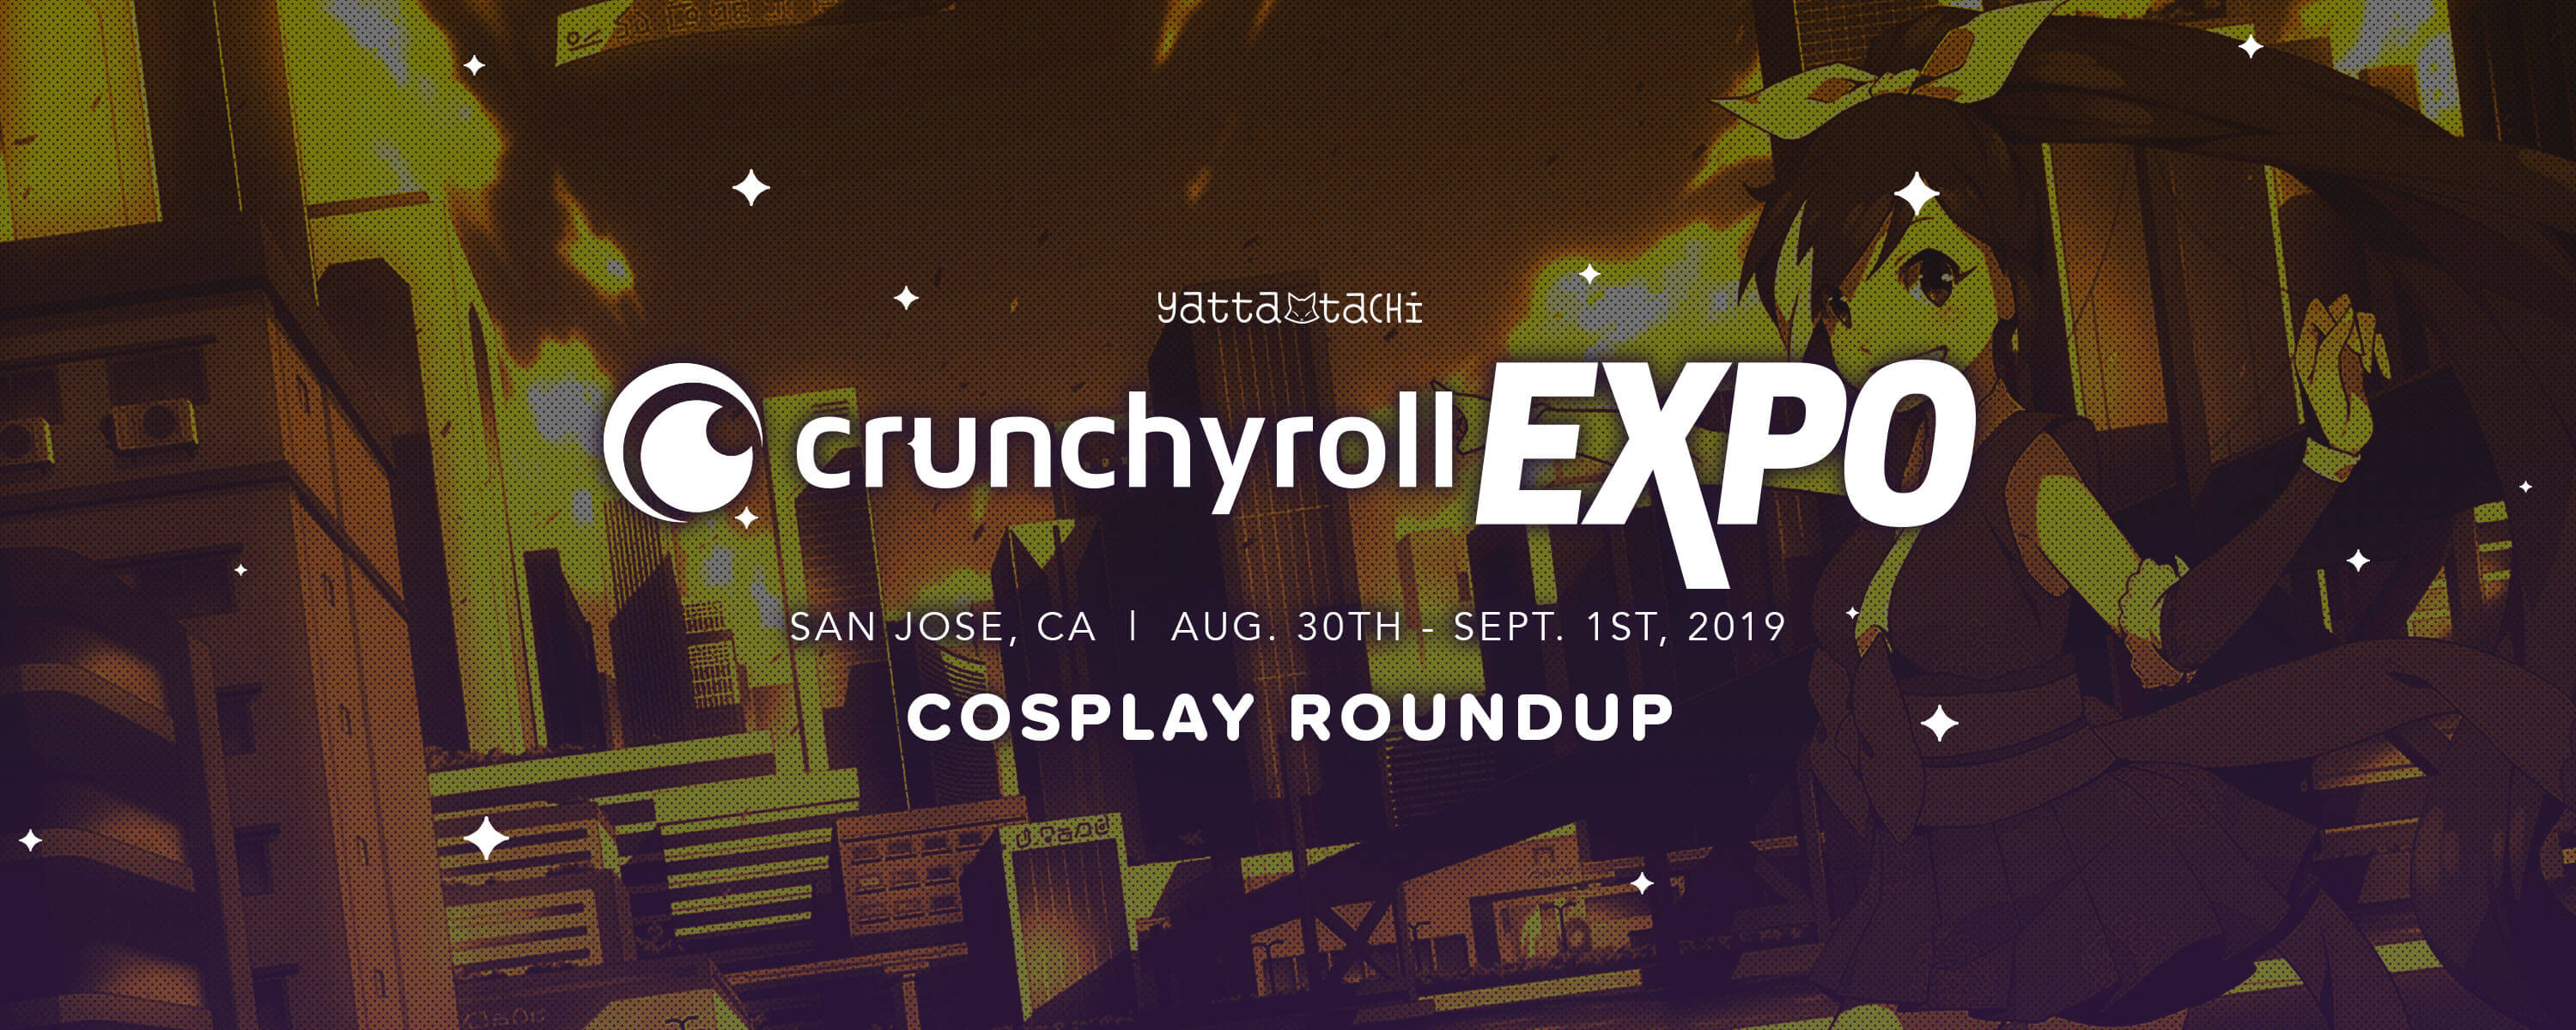 Crunchyroll Expo 2022 - San Jose Downtown